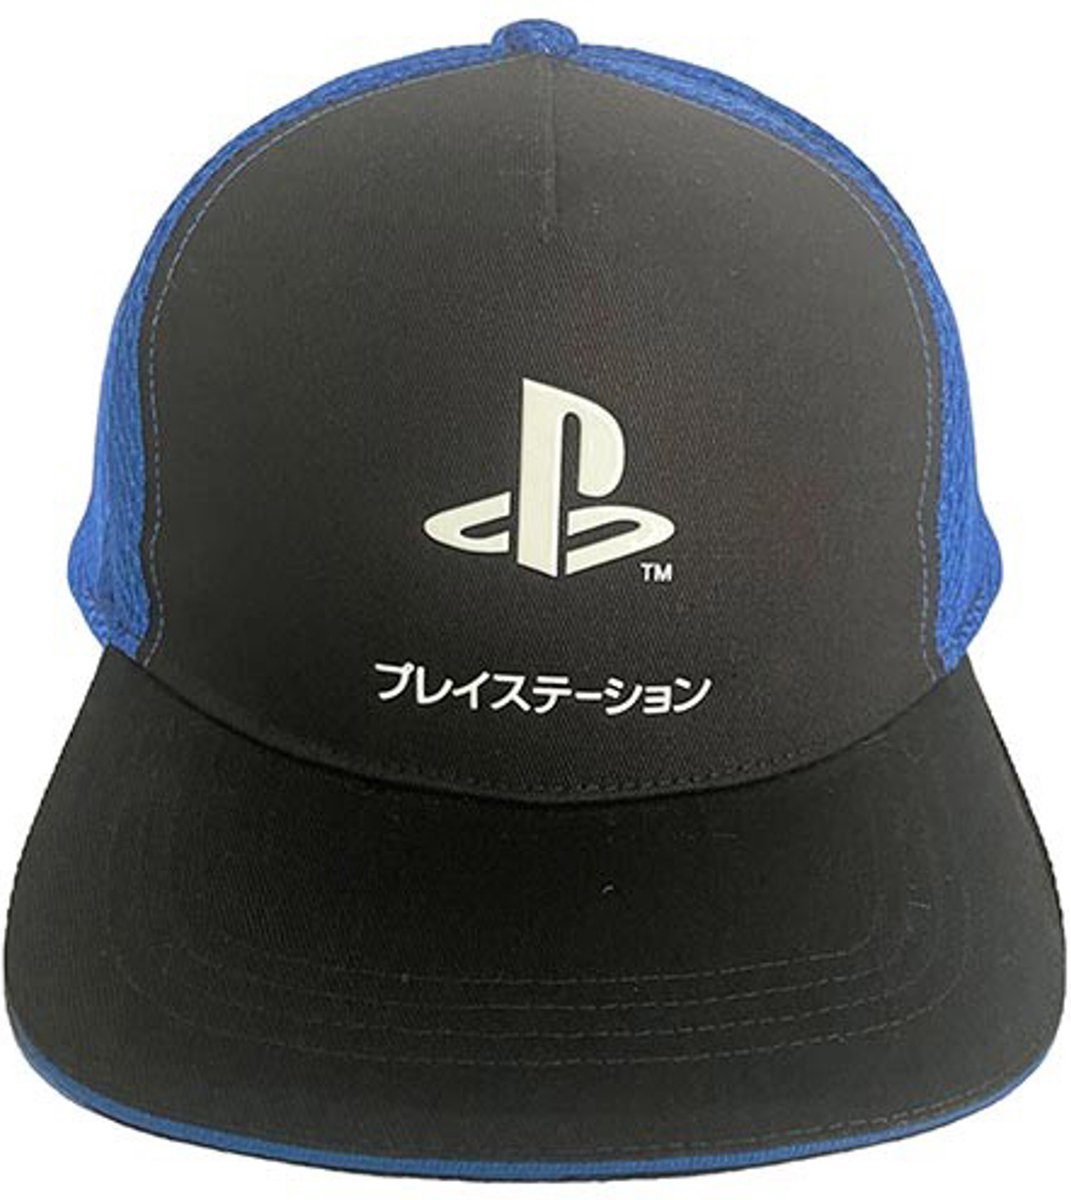 Playstation - Blauw en zwart Katakana-logo Snapback Cap